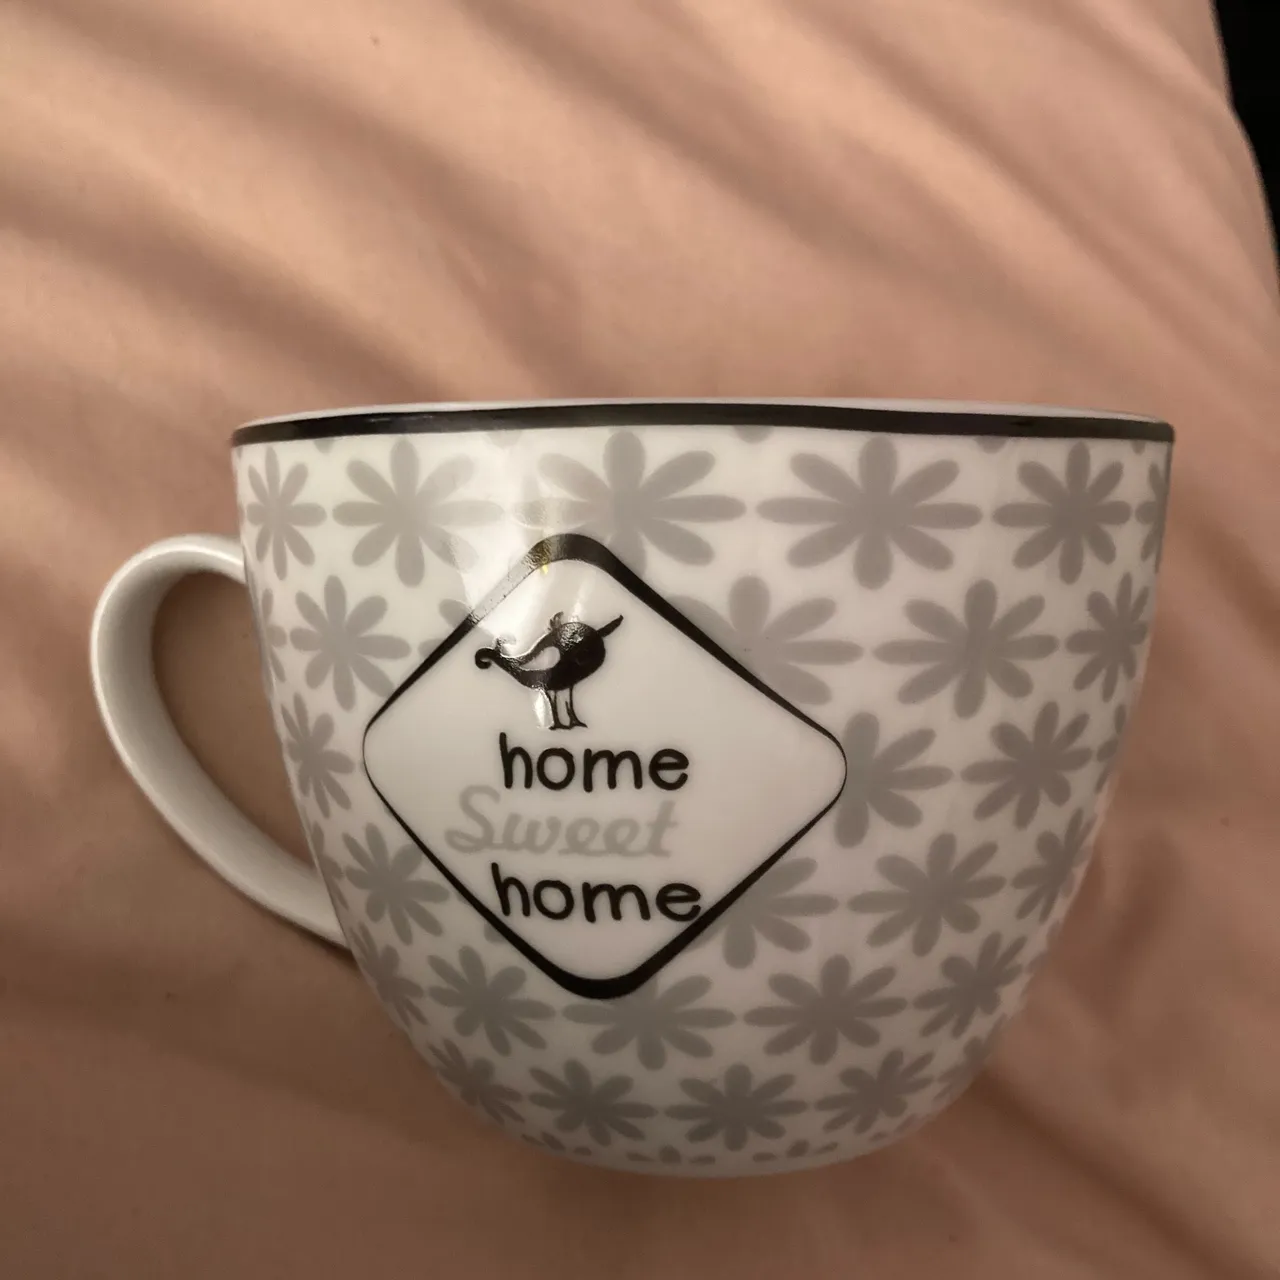 home sweet home mug photo 1